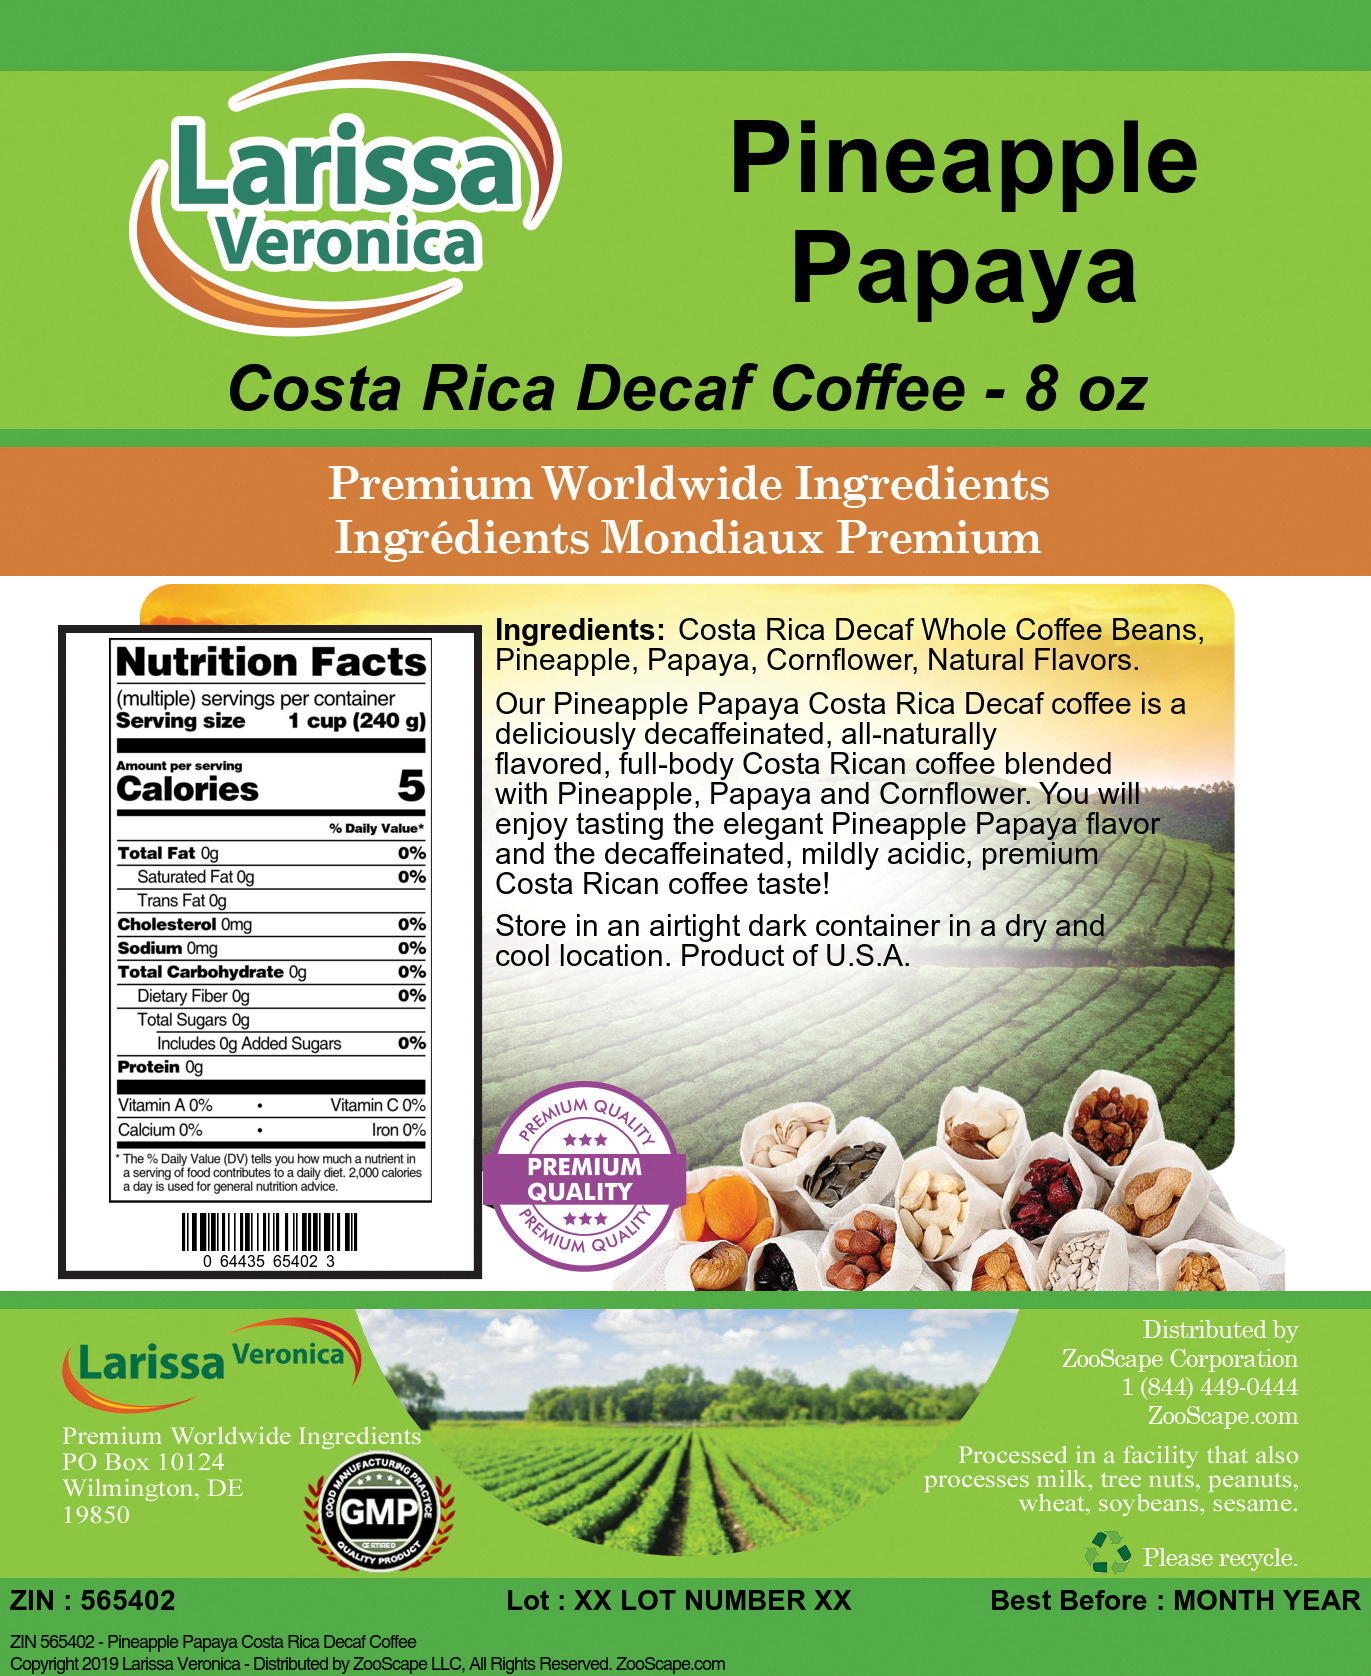 Pineapple Papaya Costa Rica Decaf Coffee - Label